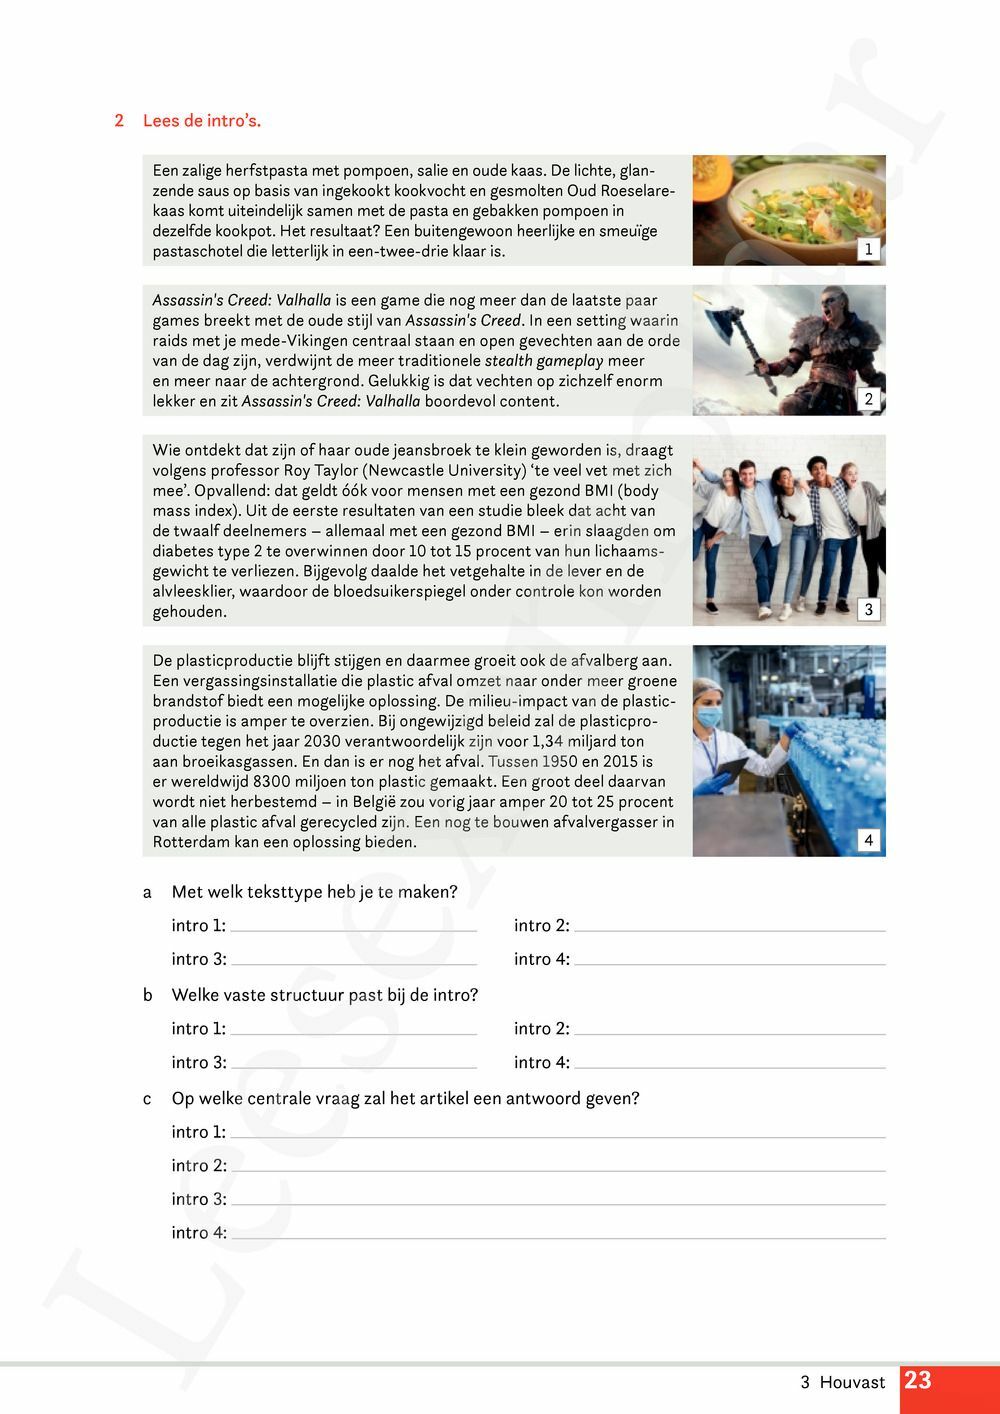 Preview: Campus Nederlands 5 Werkboek (incl. Pelckmans Portaal)